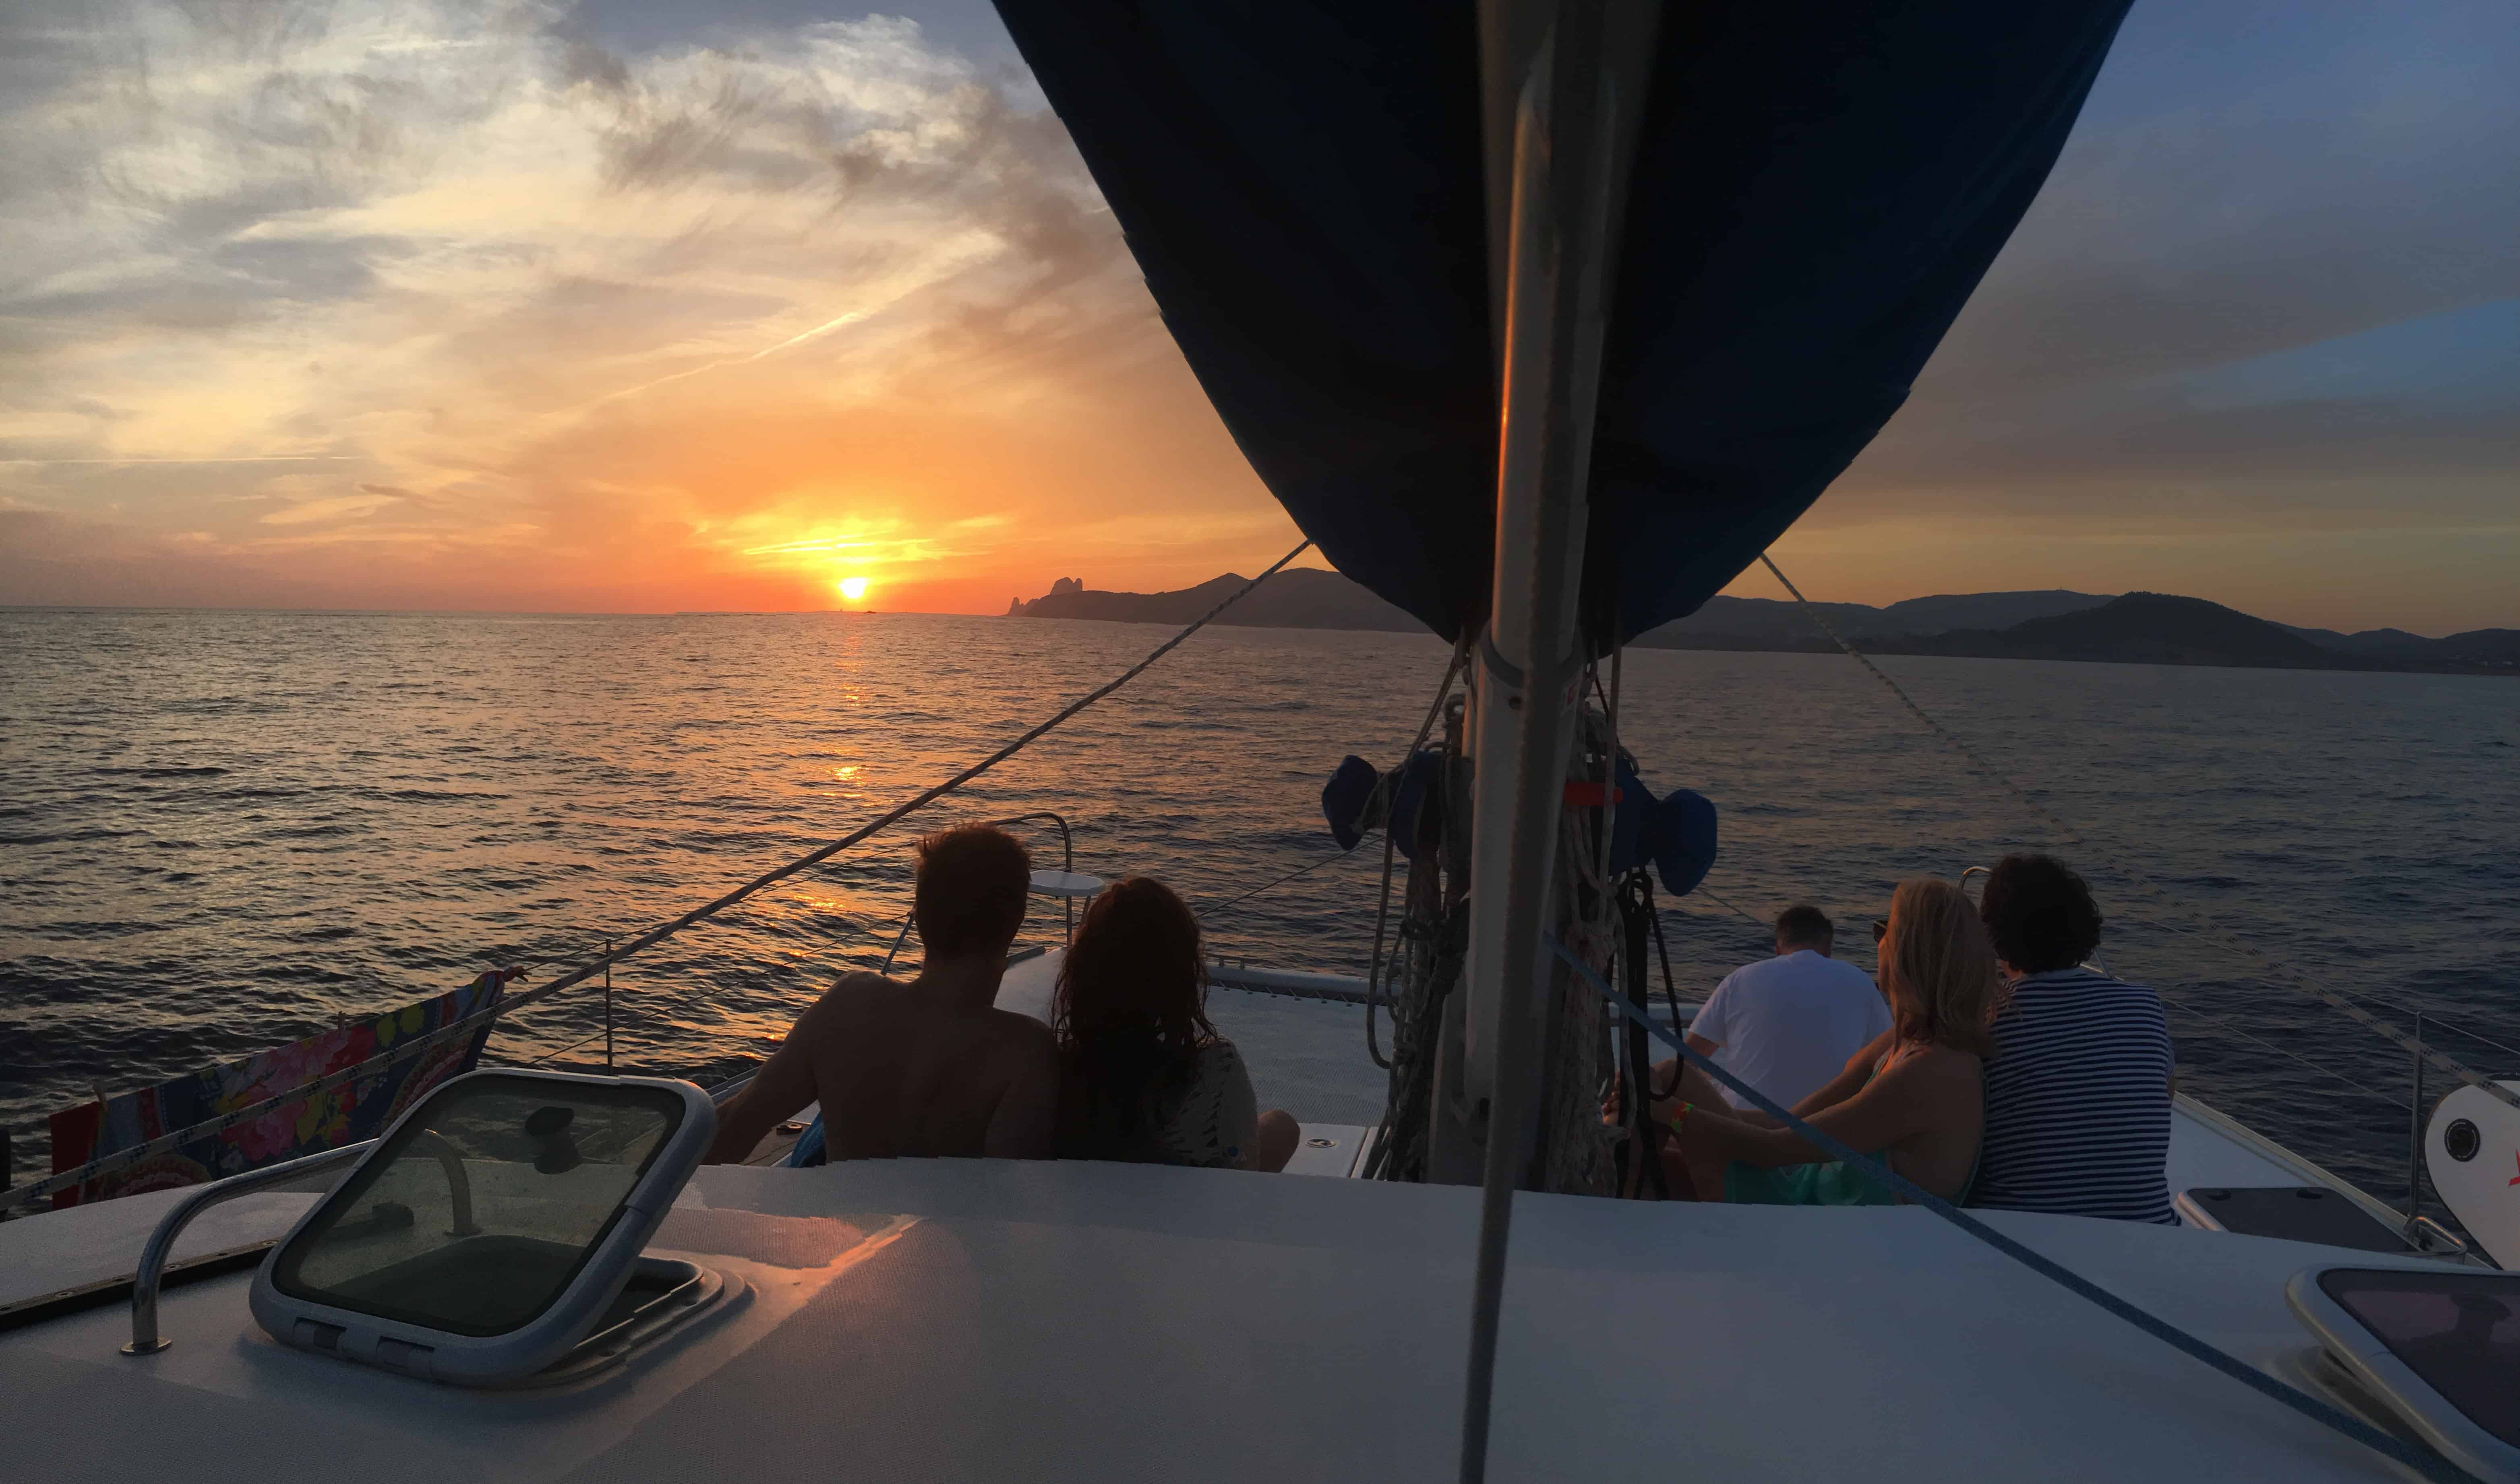 catamaran for families in Ibiza - family enjoying the sunset on board our catamaran in Ibiza